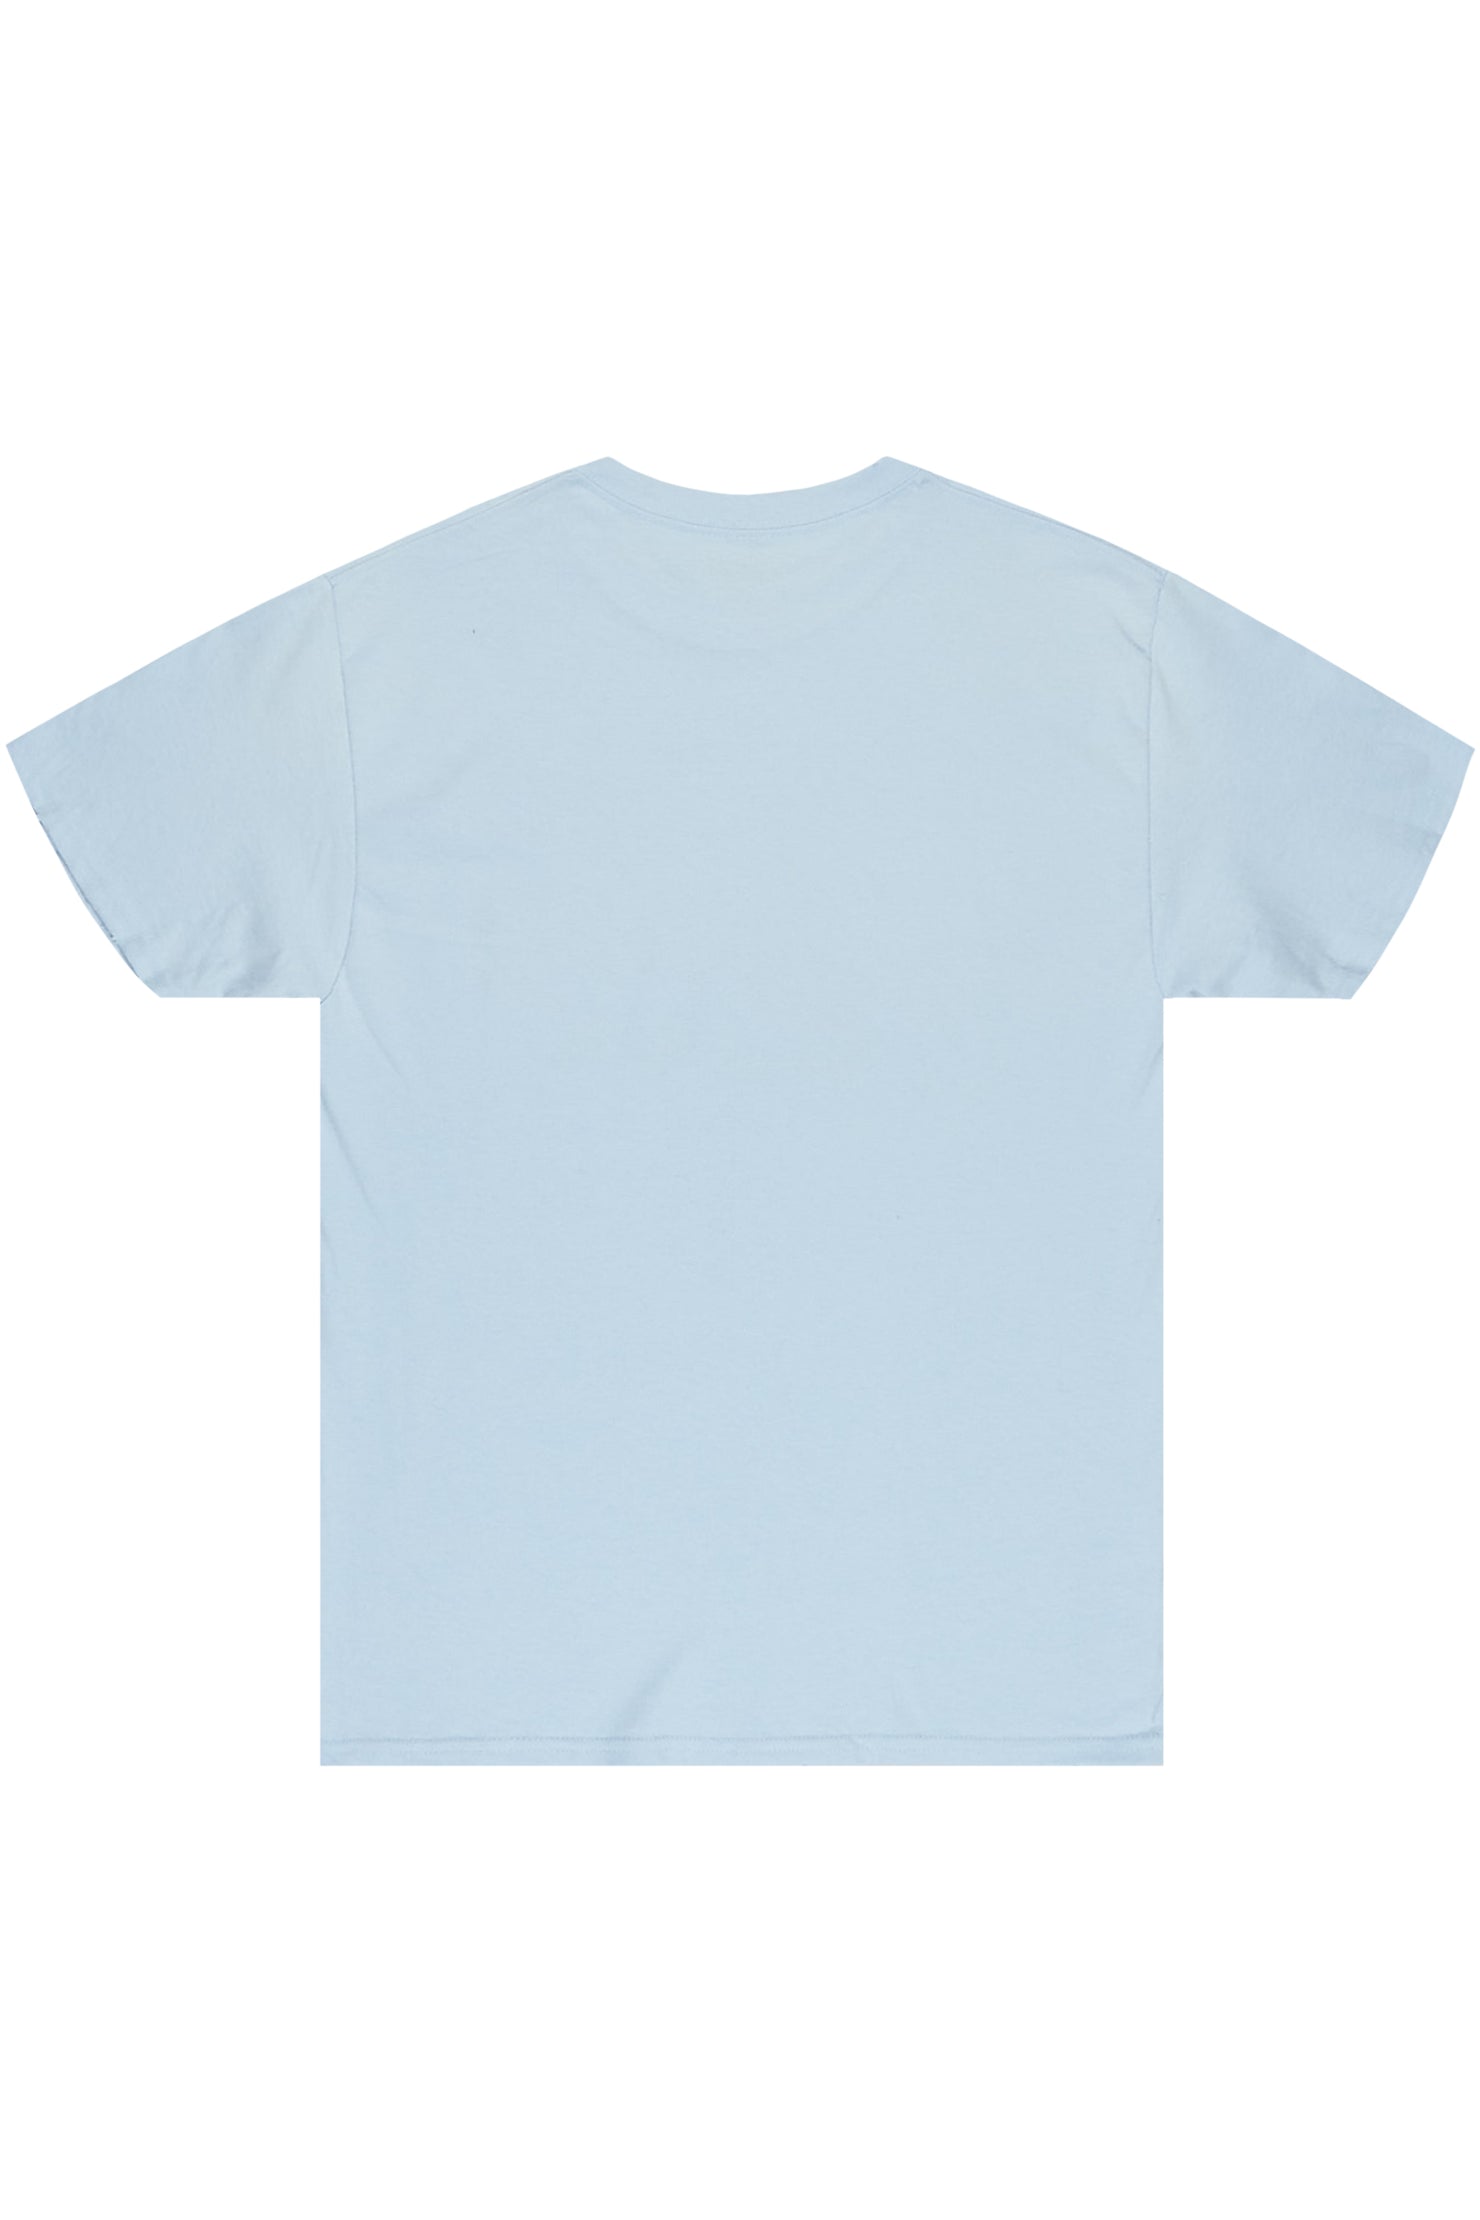 Zustrand Light Blue Original Graphic Rockstar T-Shirt–